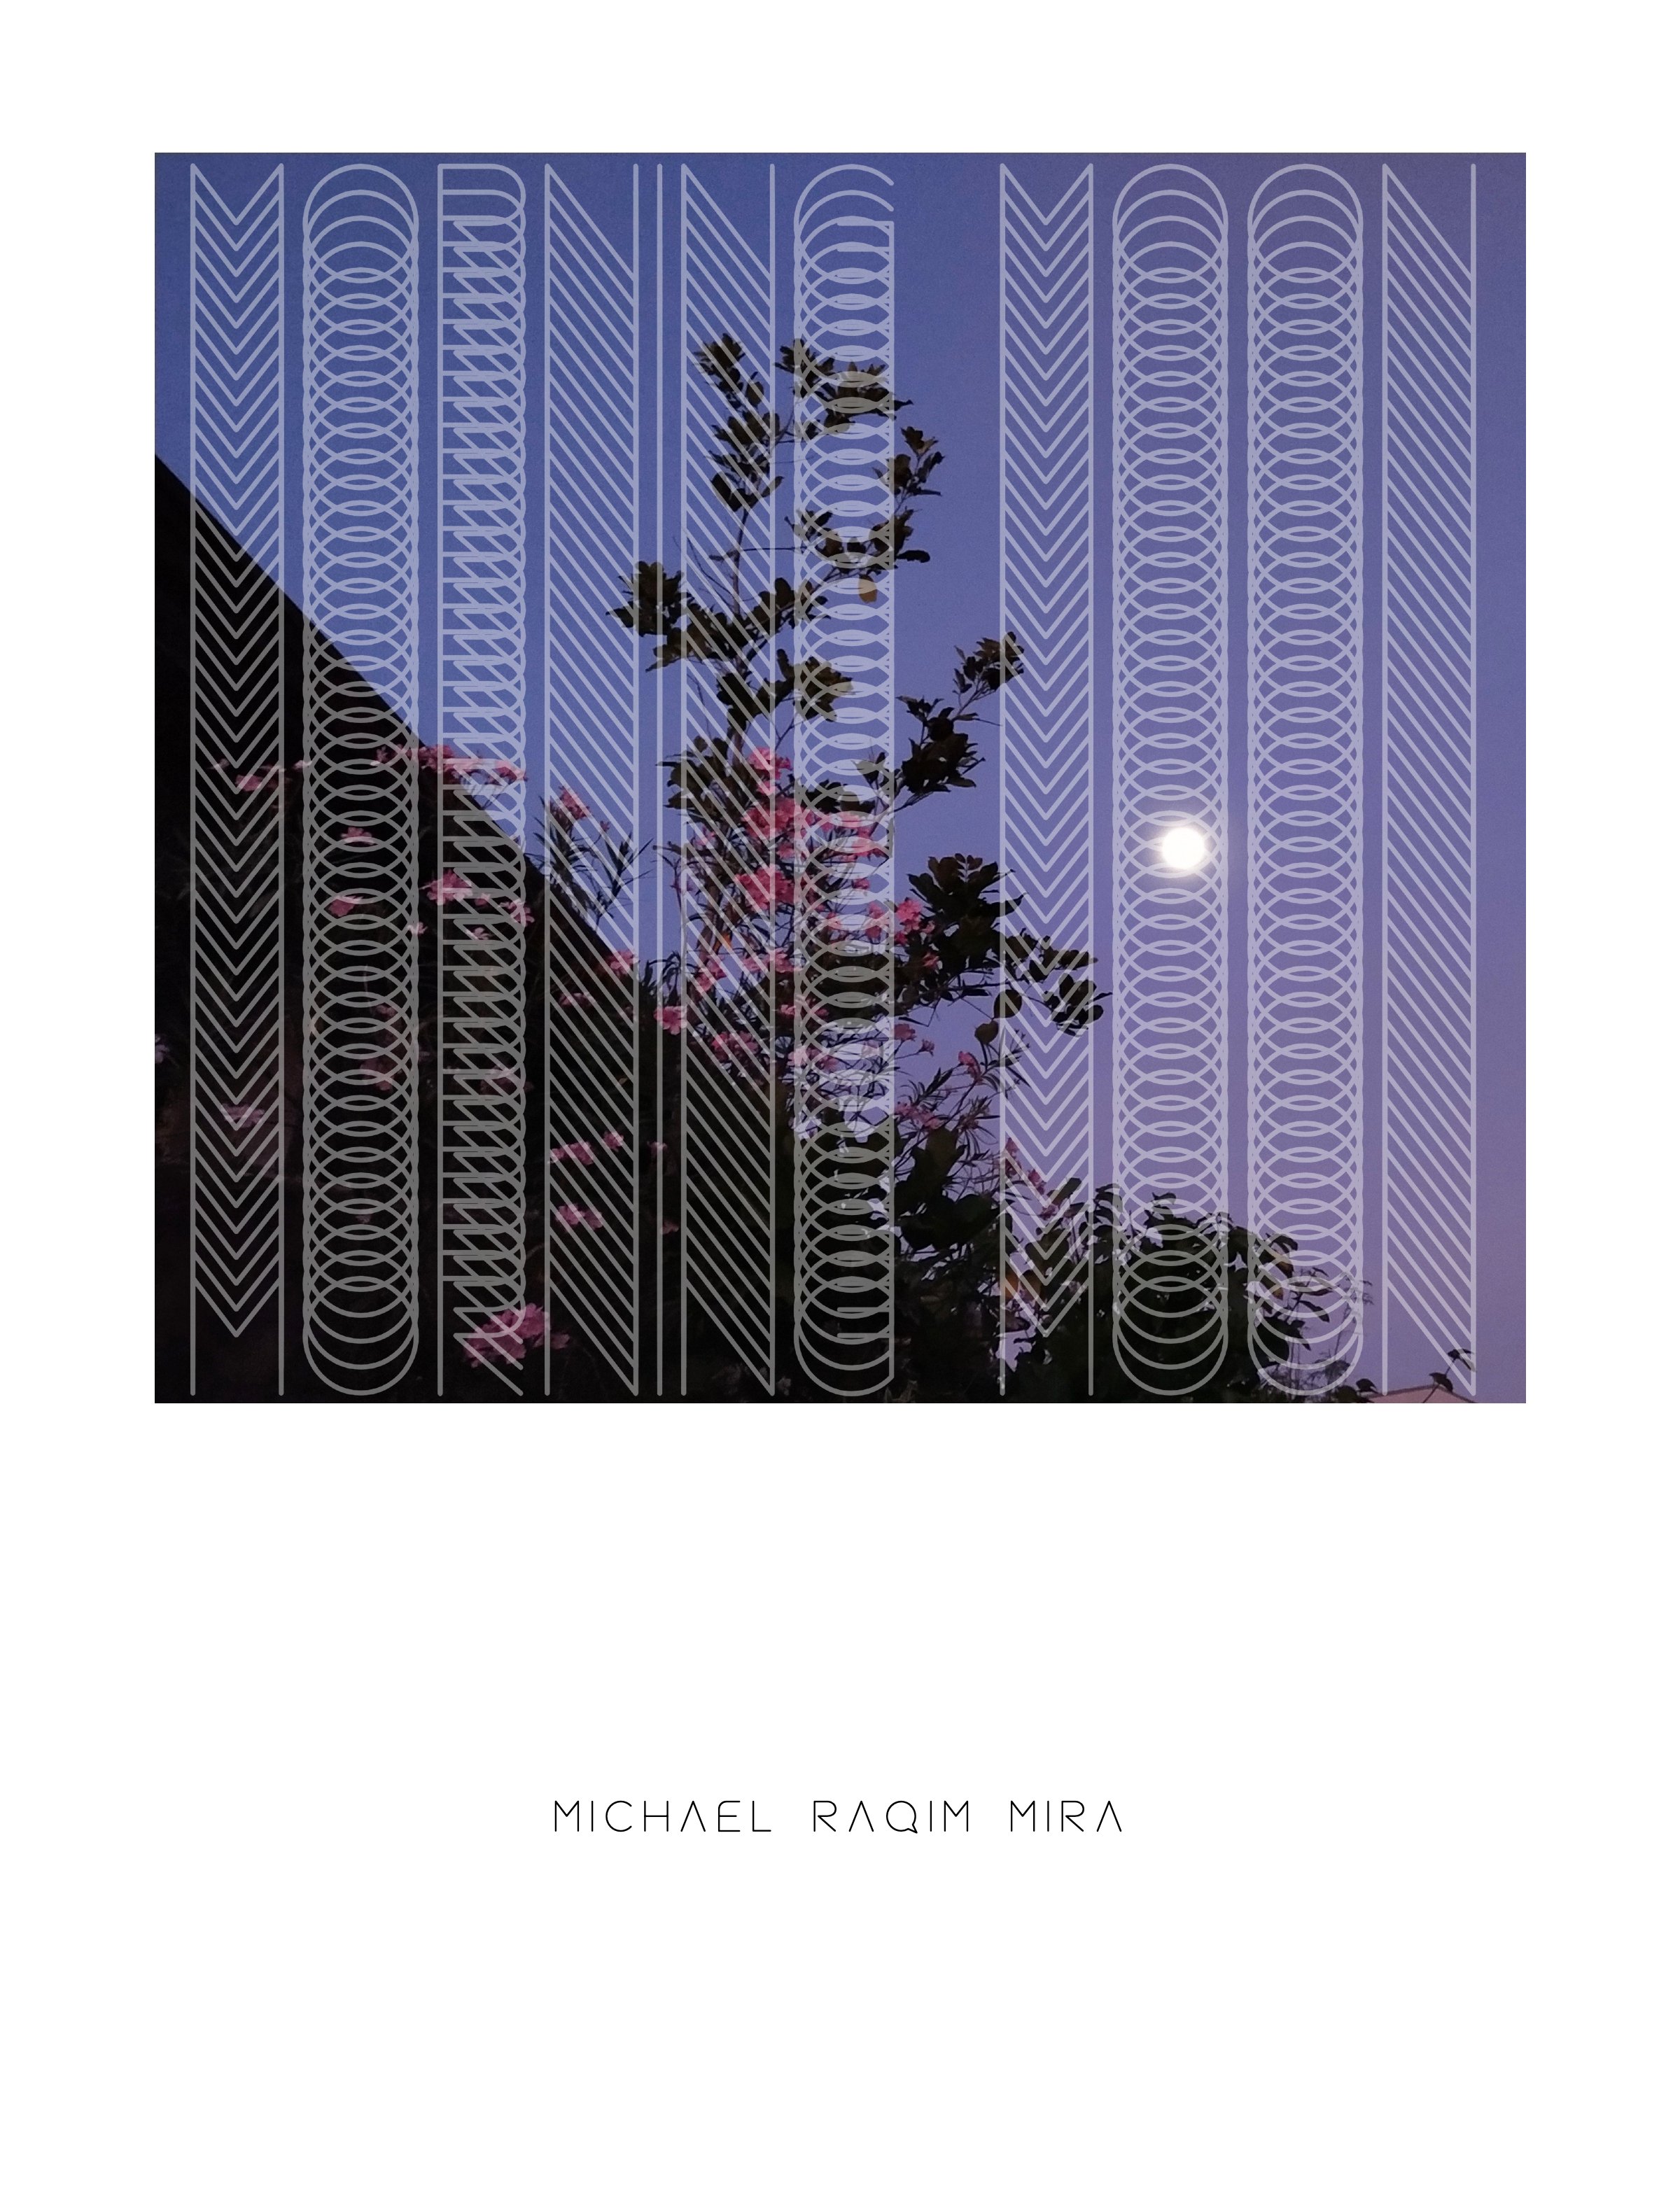 Morning Moon by Michael Raqim Mira.jpg